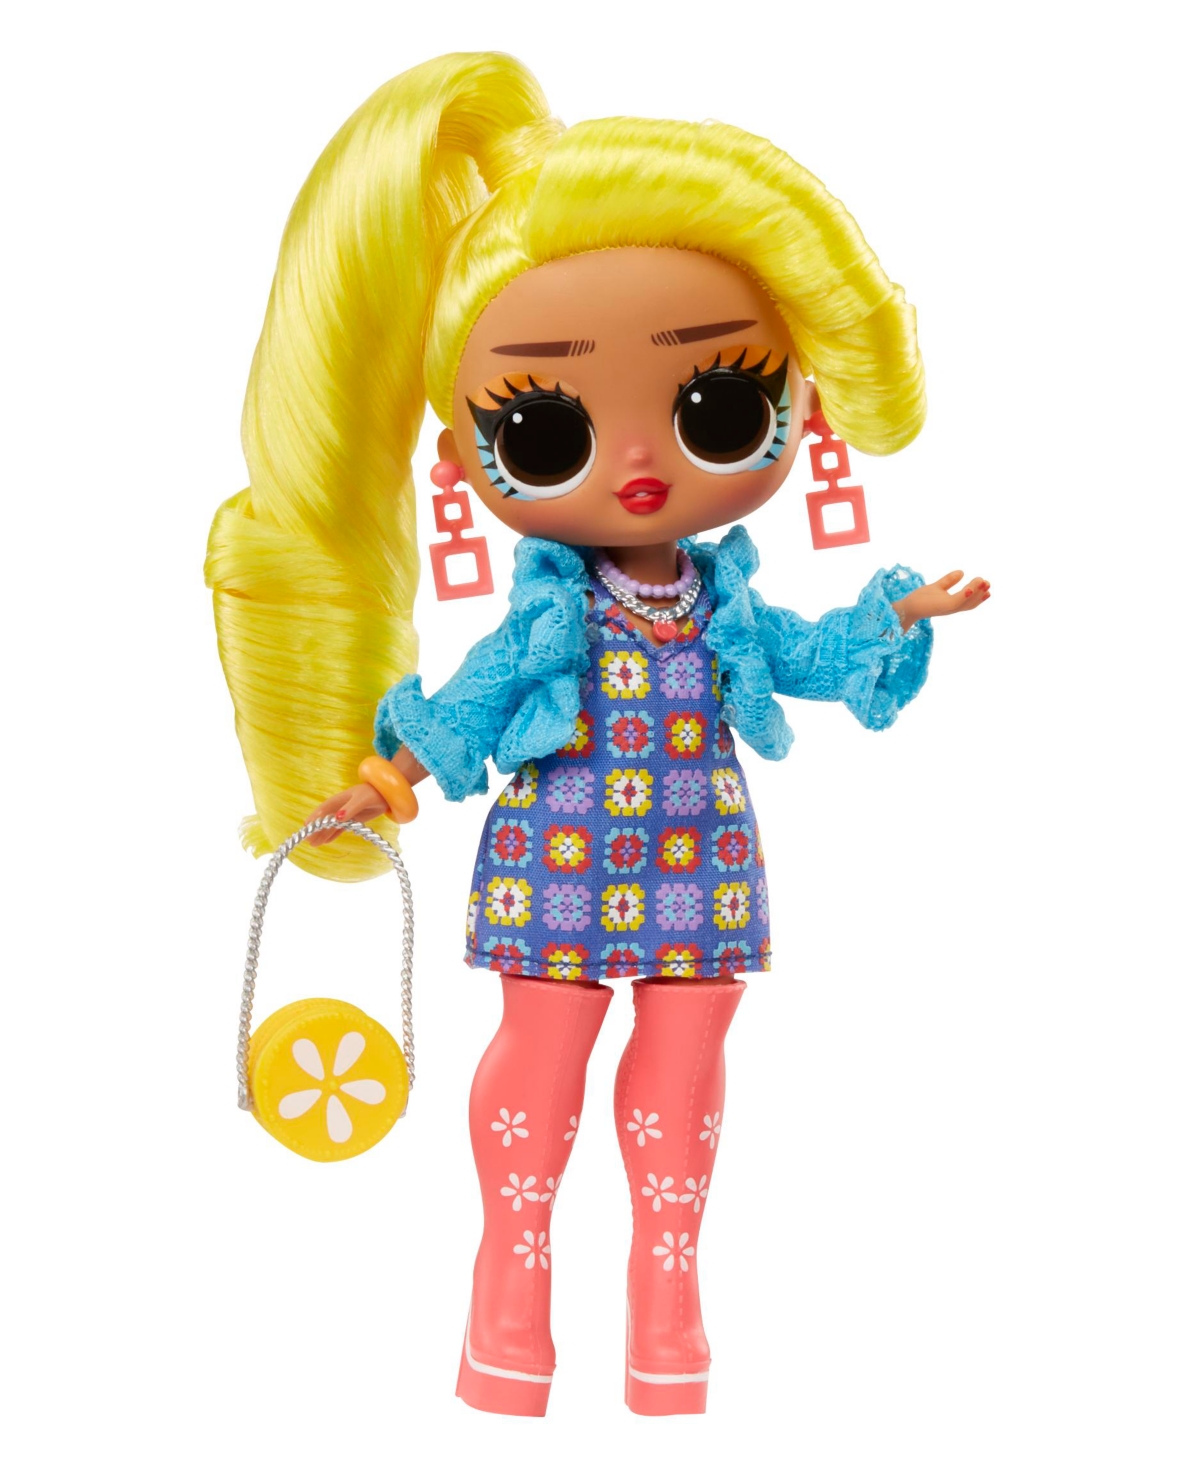 Shop Lol Surprise Tweens Core Doll Hana Groove In Multicolor